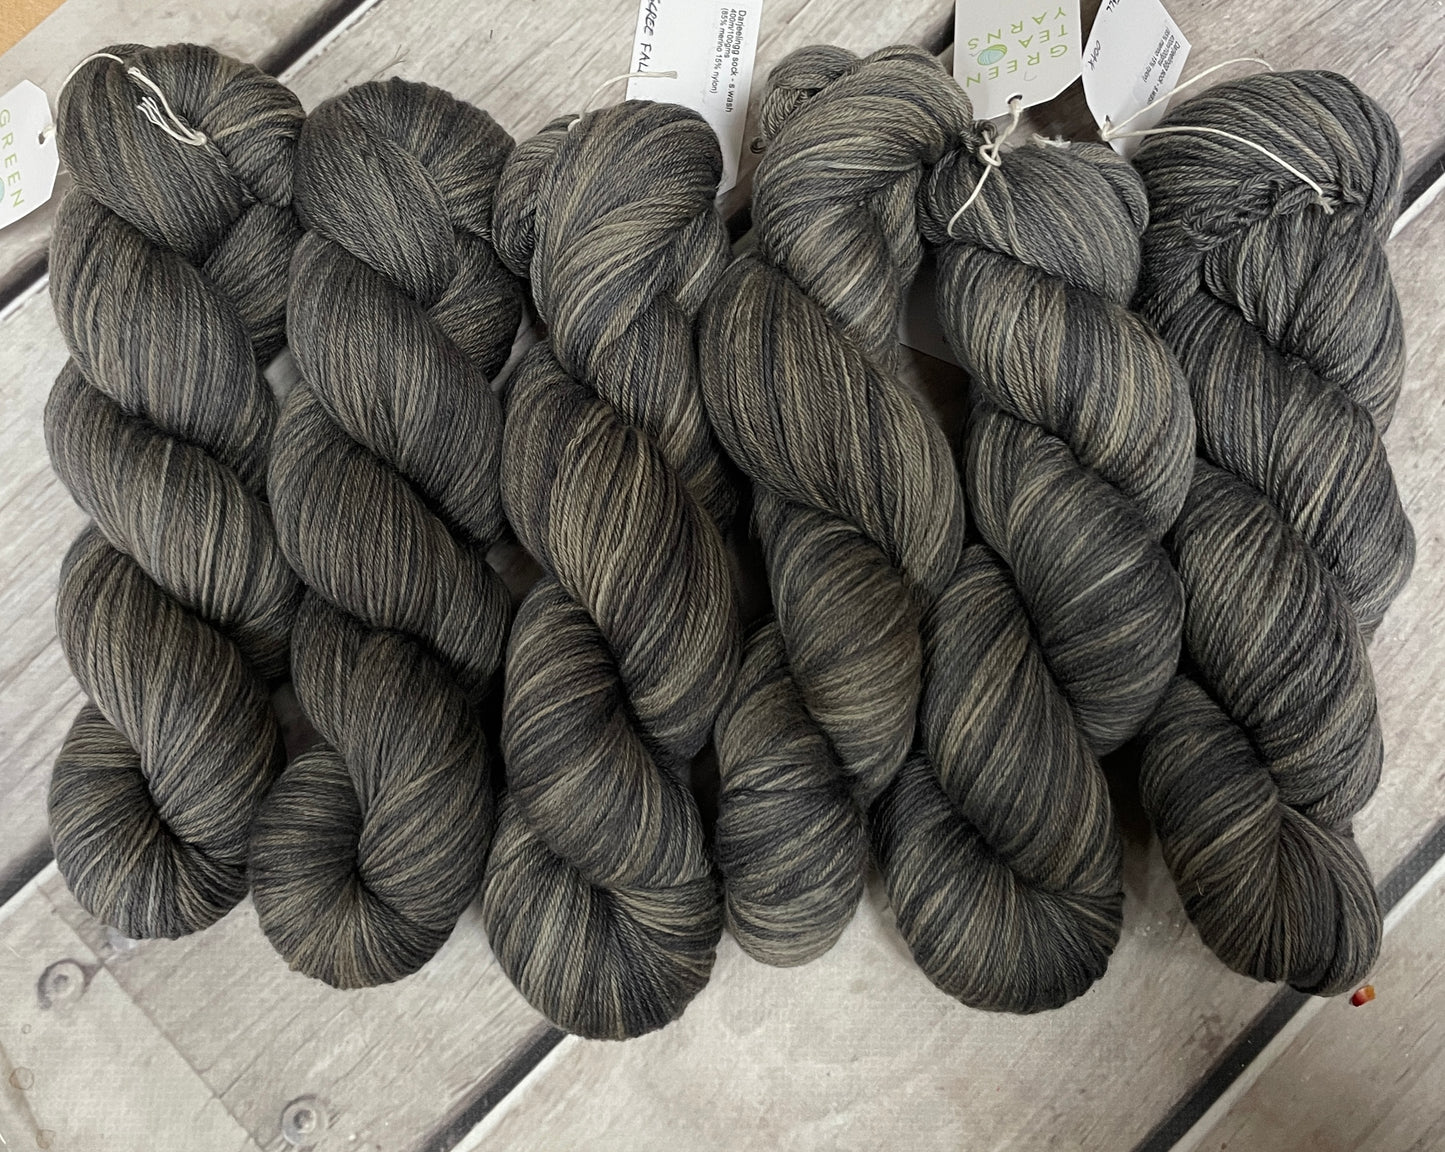 Scree Fall ooak - Darjeeling 4 ply sock yarn in merino and nylon